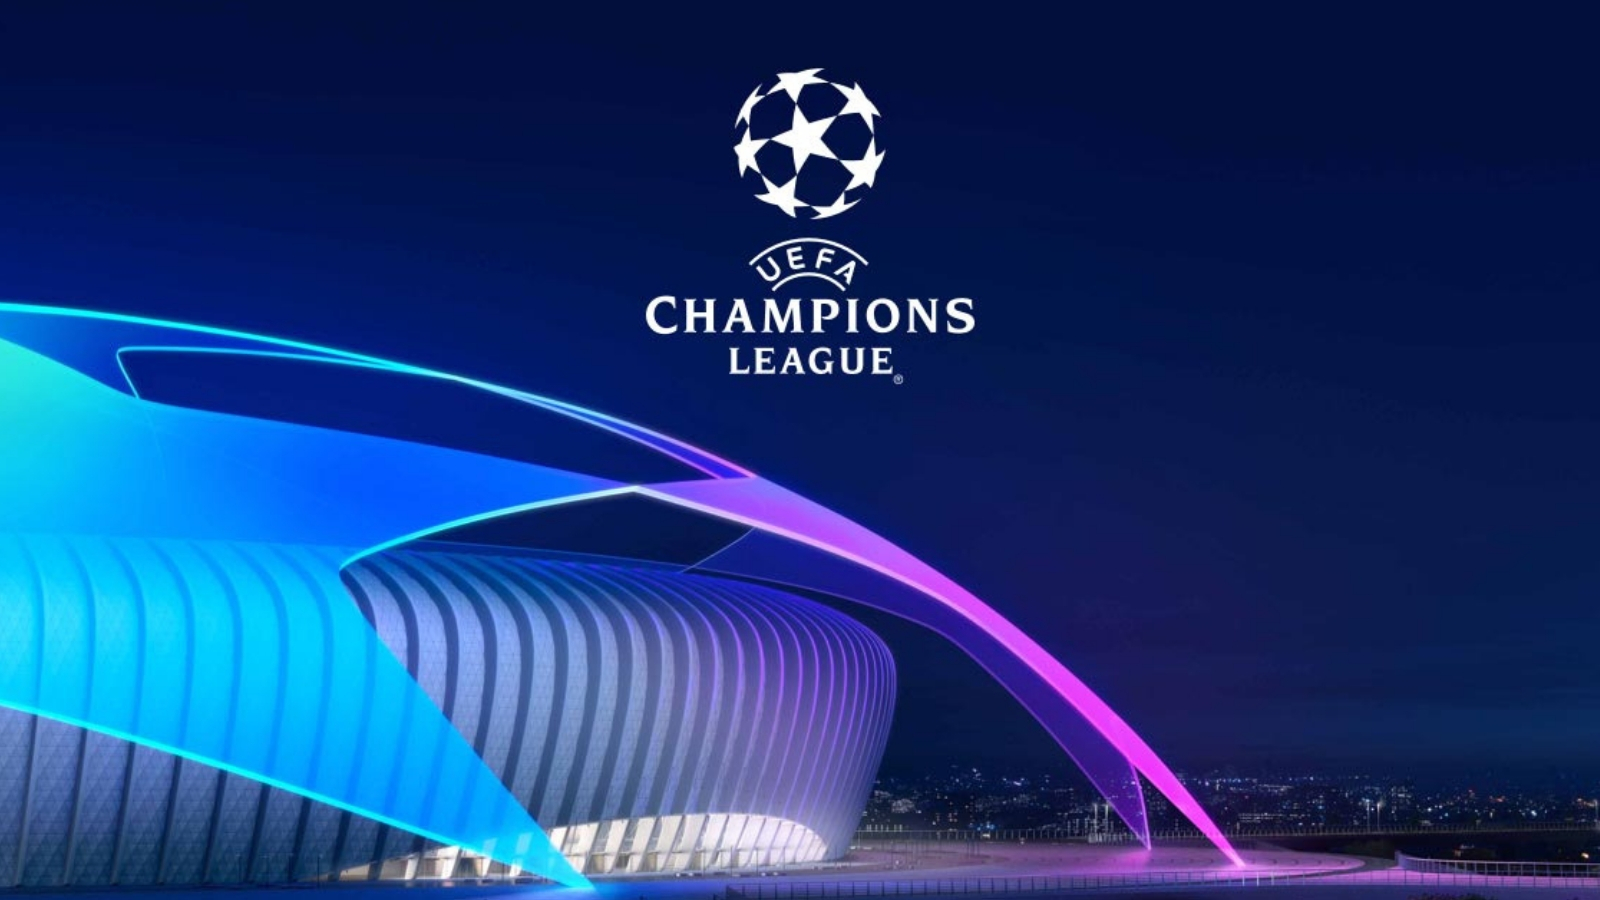 Uefa Champions League 2020 , HD Wallpaper & Backgrounds